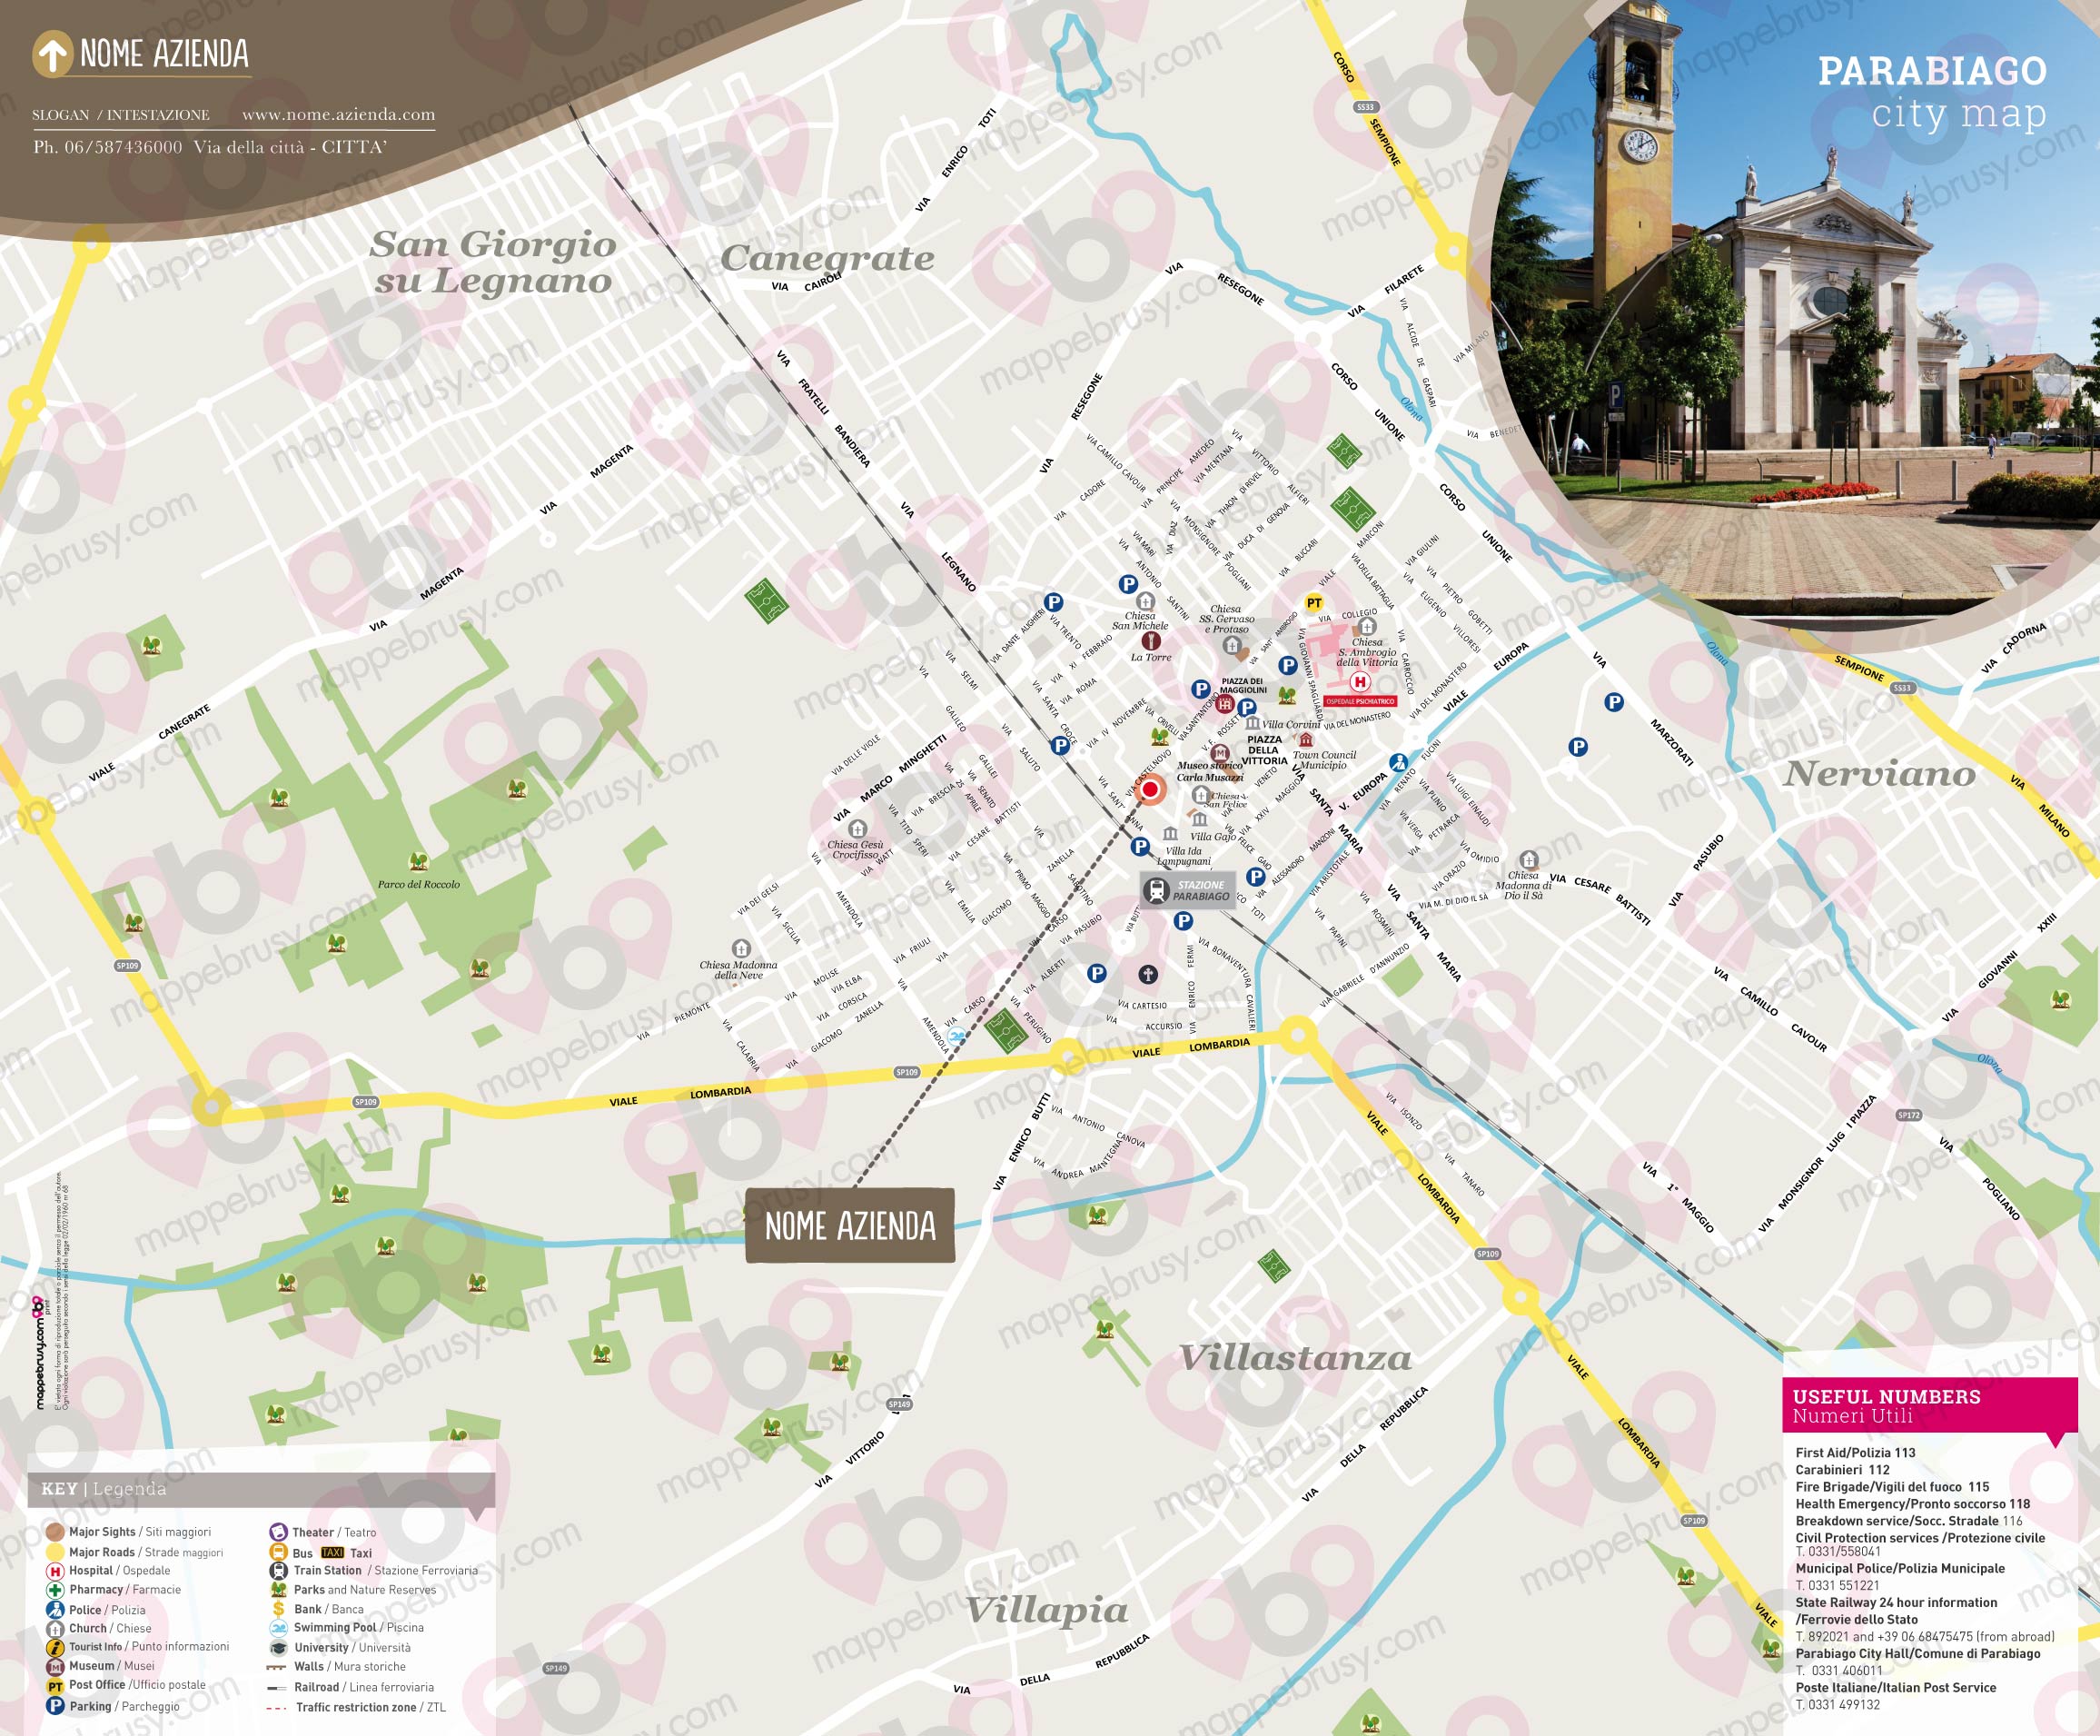 Mappa di Parabiago - Parabiago city map - mappa Parabiago - mappa personalizzata di Parabiago